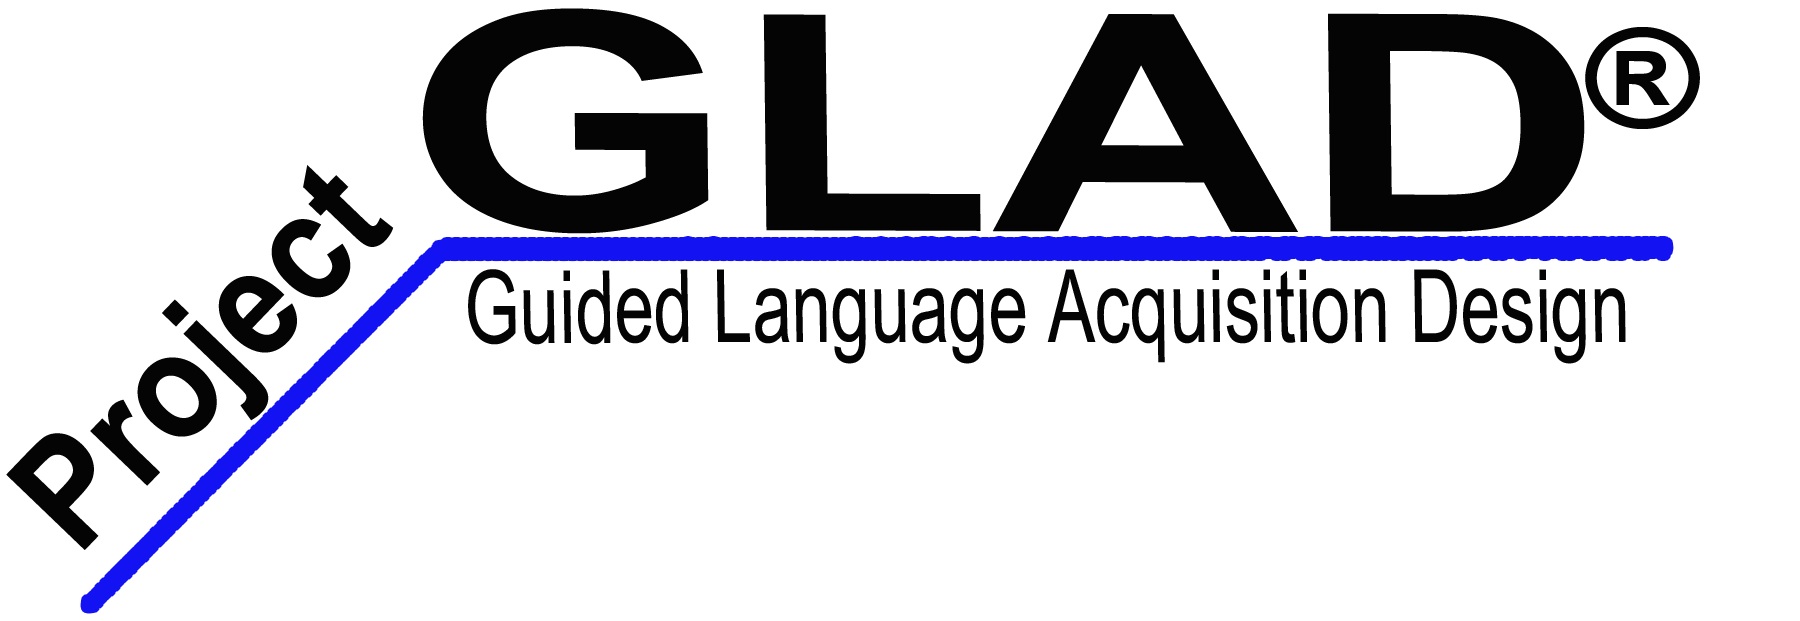 New Project_GLAD logo.jpg